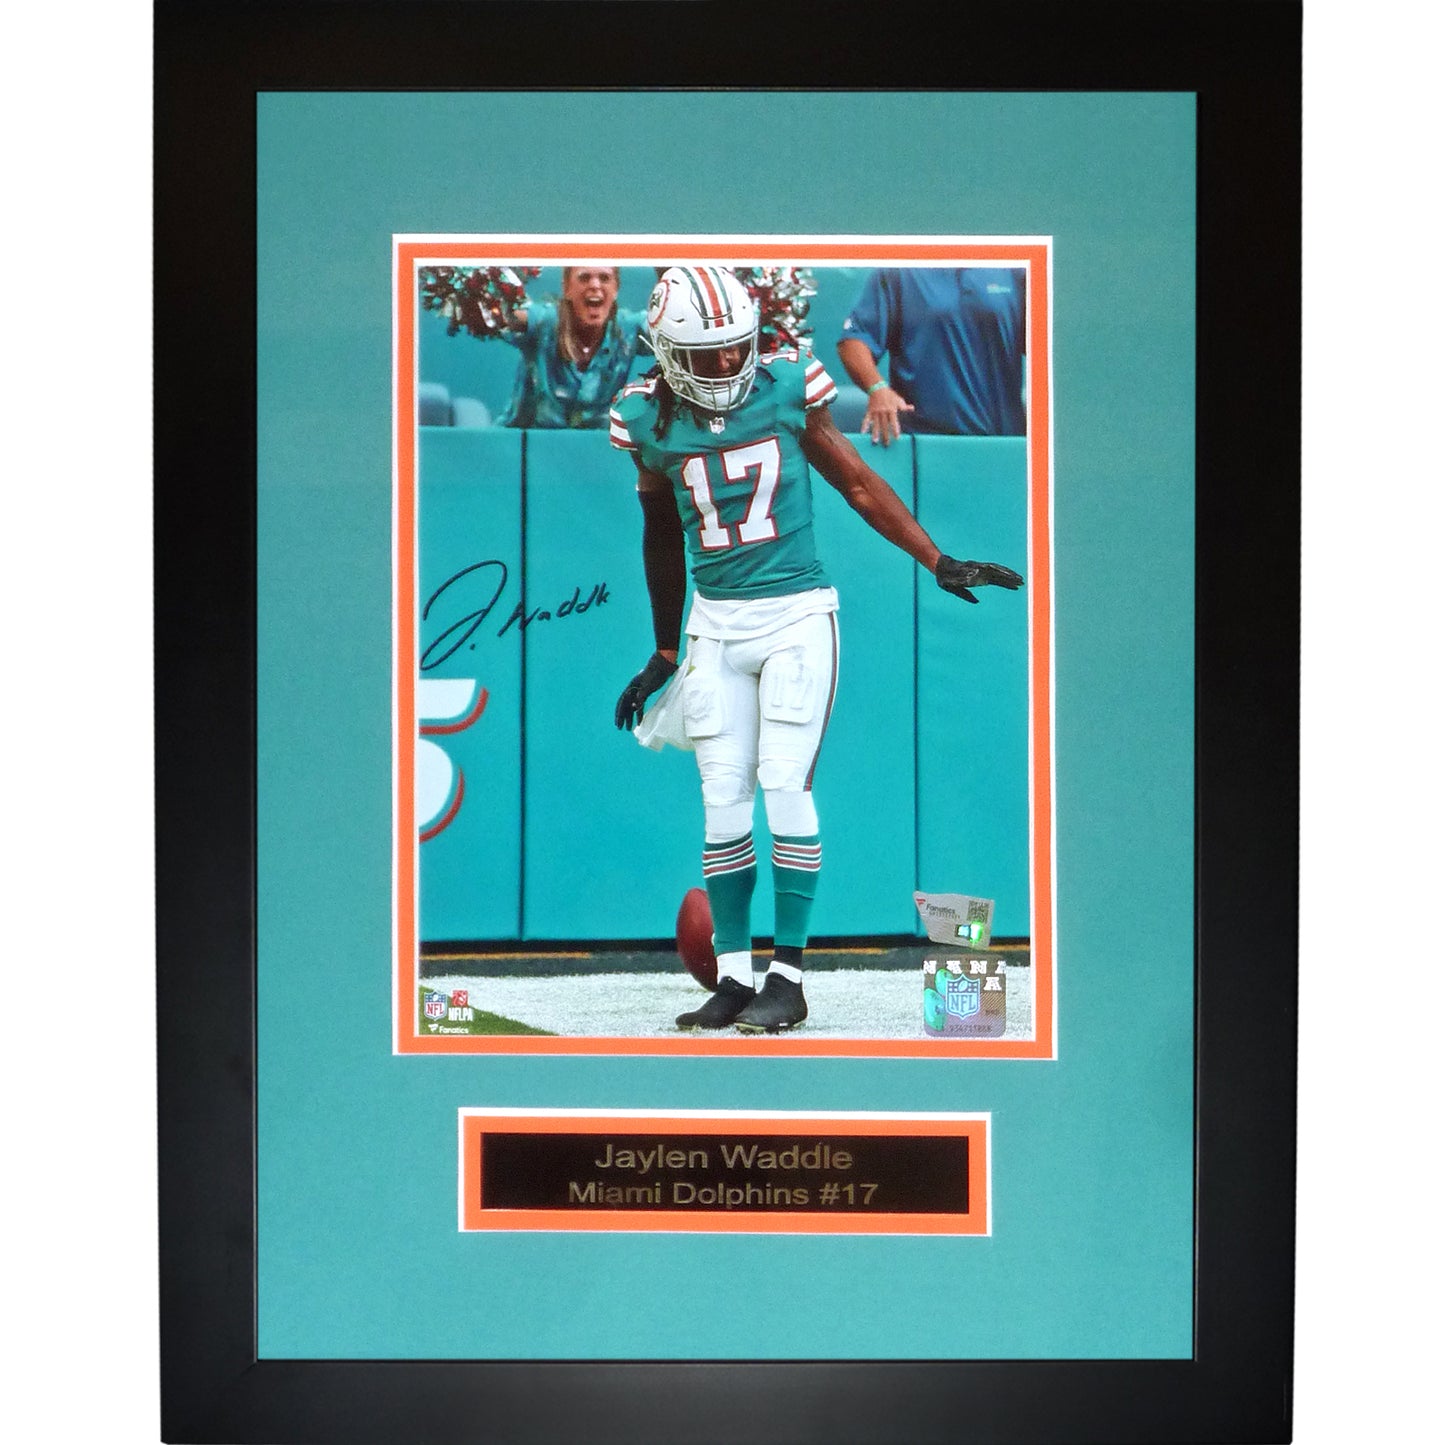 Jaylen Waddle Autographed Miami Dolphins (TD Celebration) Framed 8x10 Photo - Fanatics